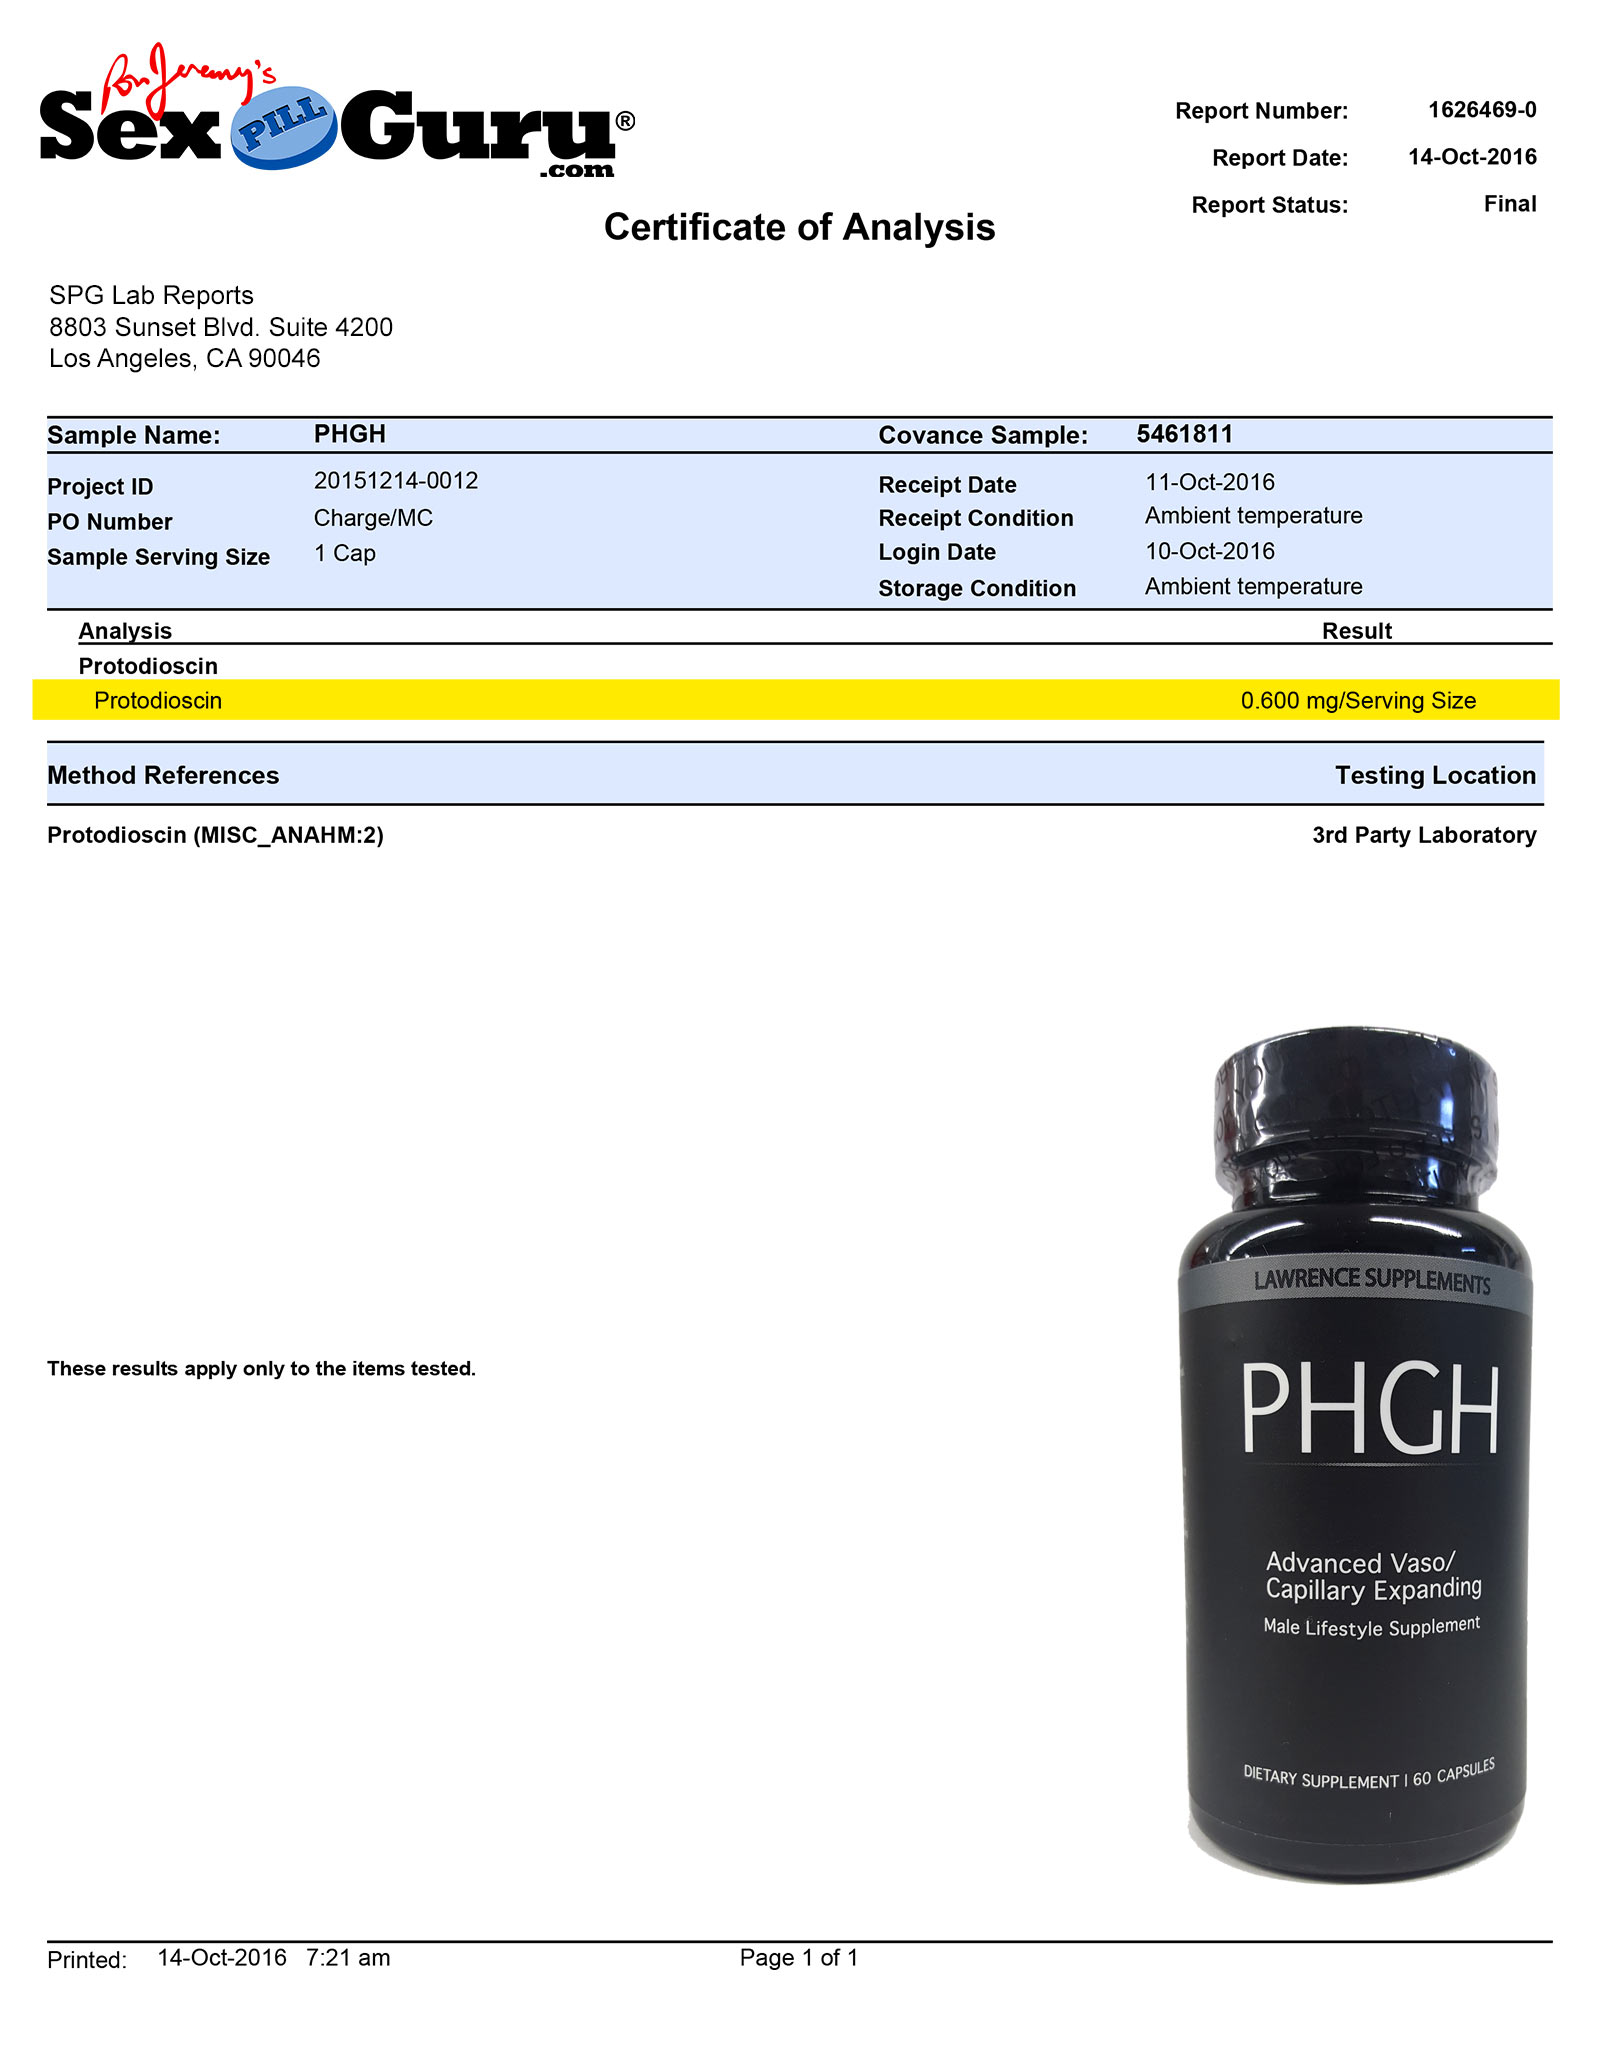 PHGH Lab Report